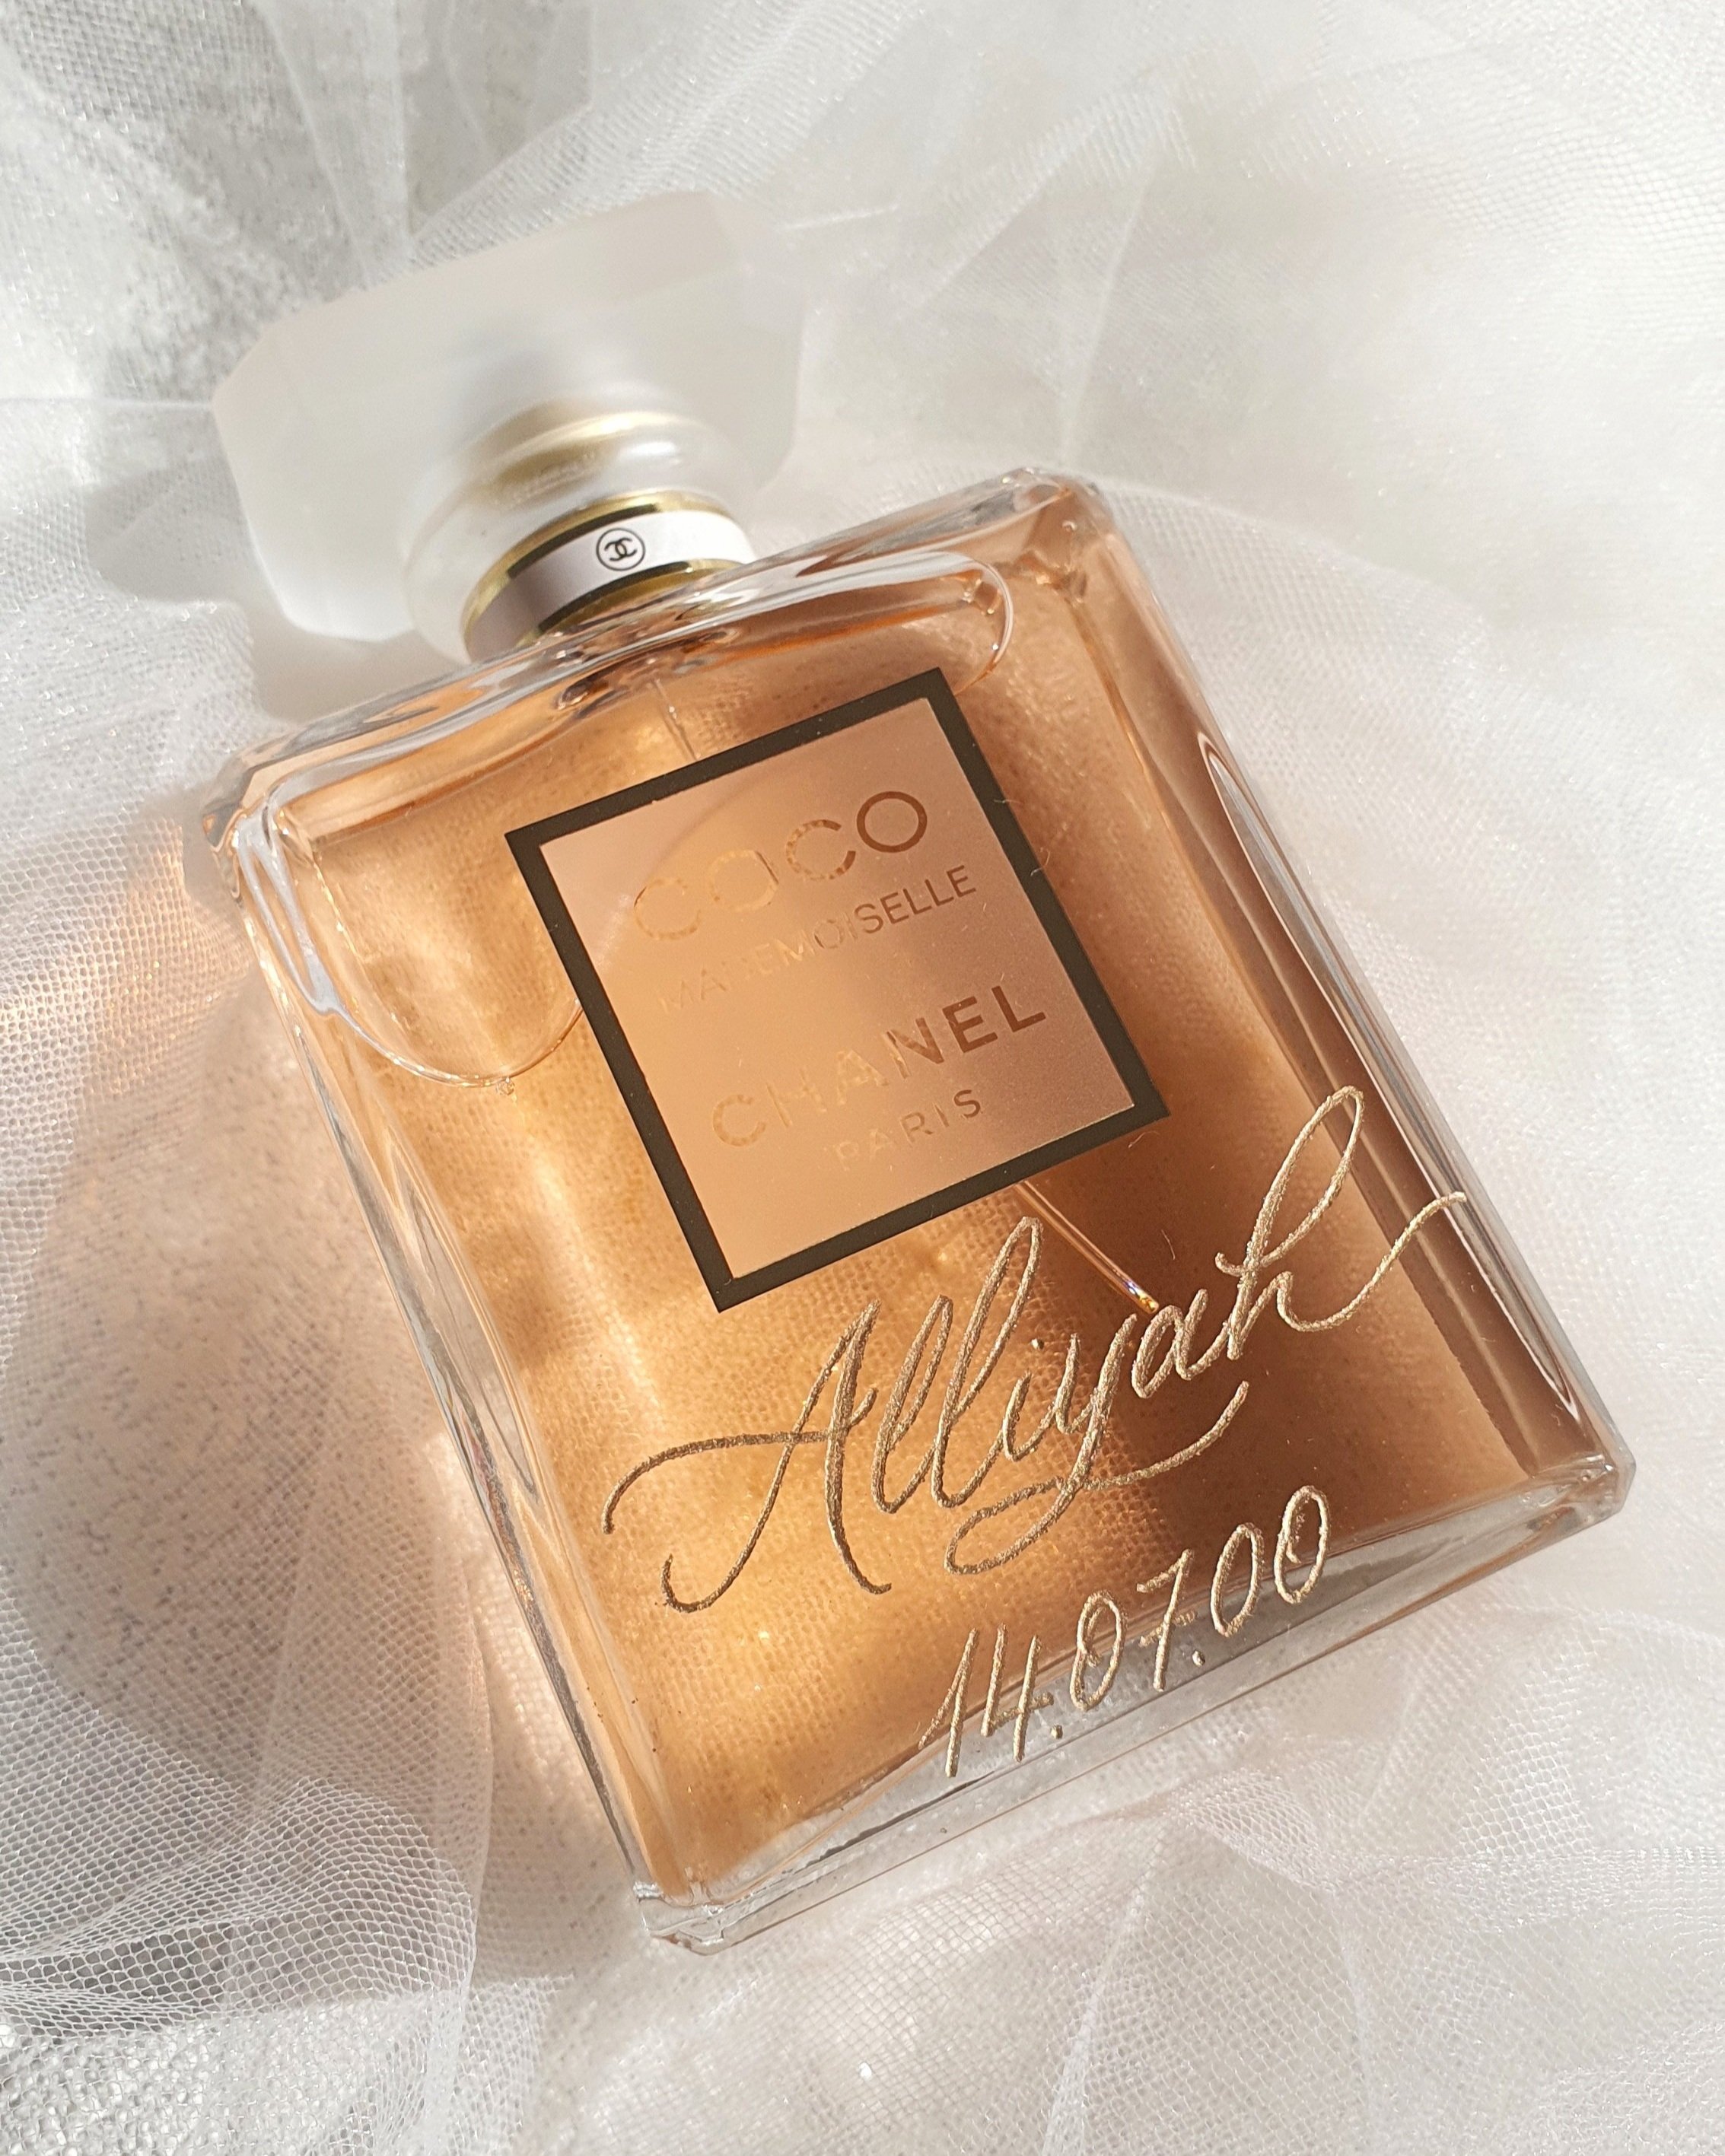 CHANEL Coco Mademoiselle Hair Perfume, 35ml at John Lewis & Partners